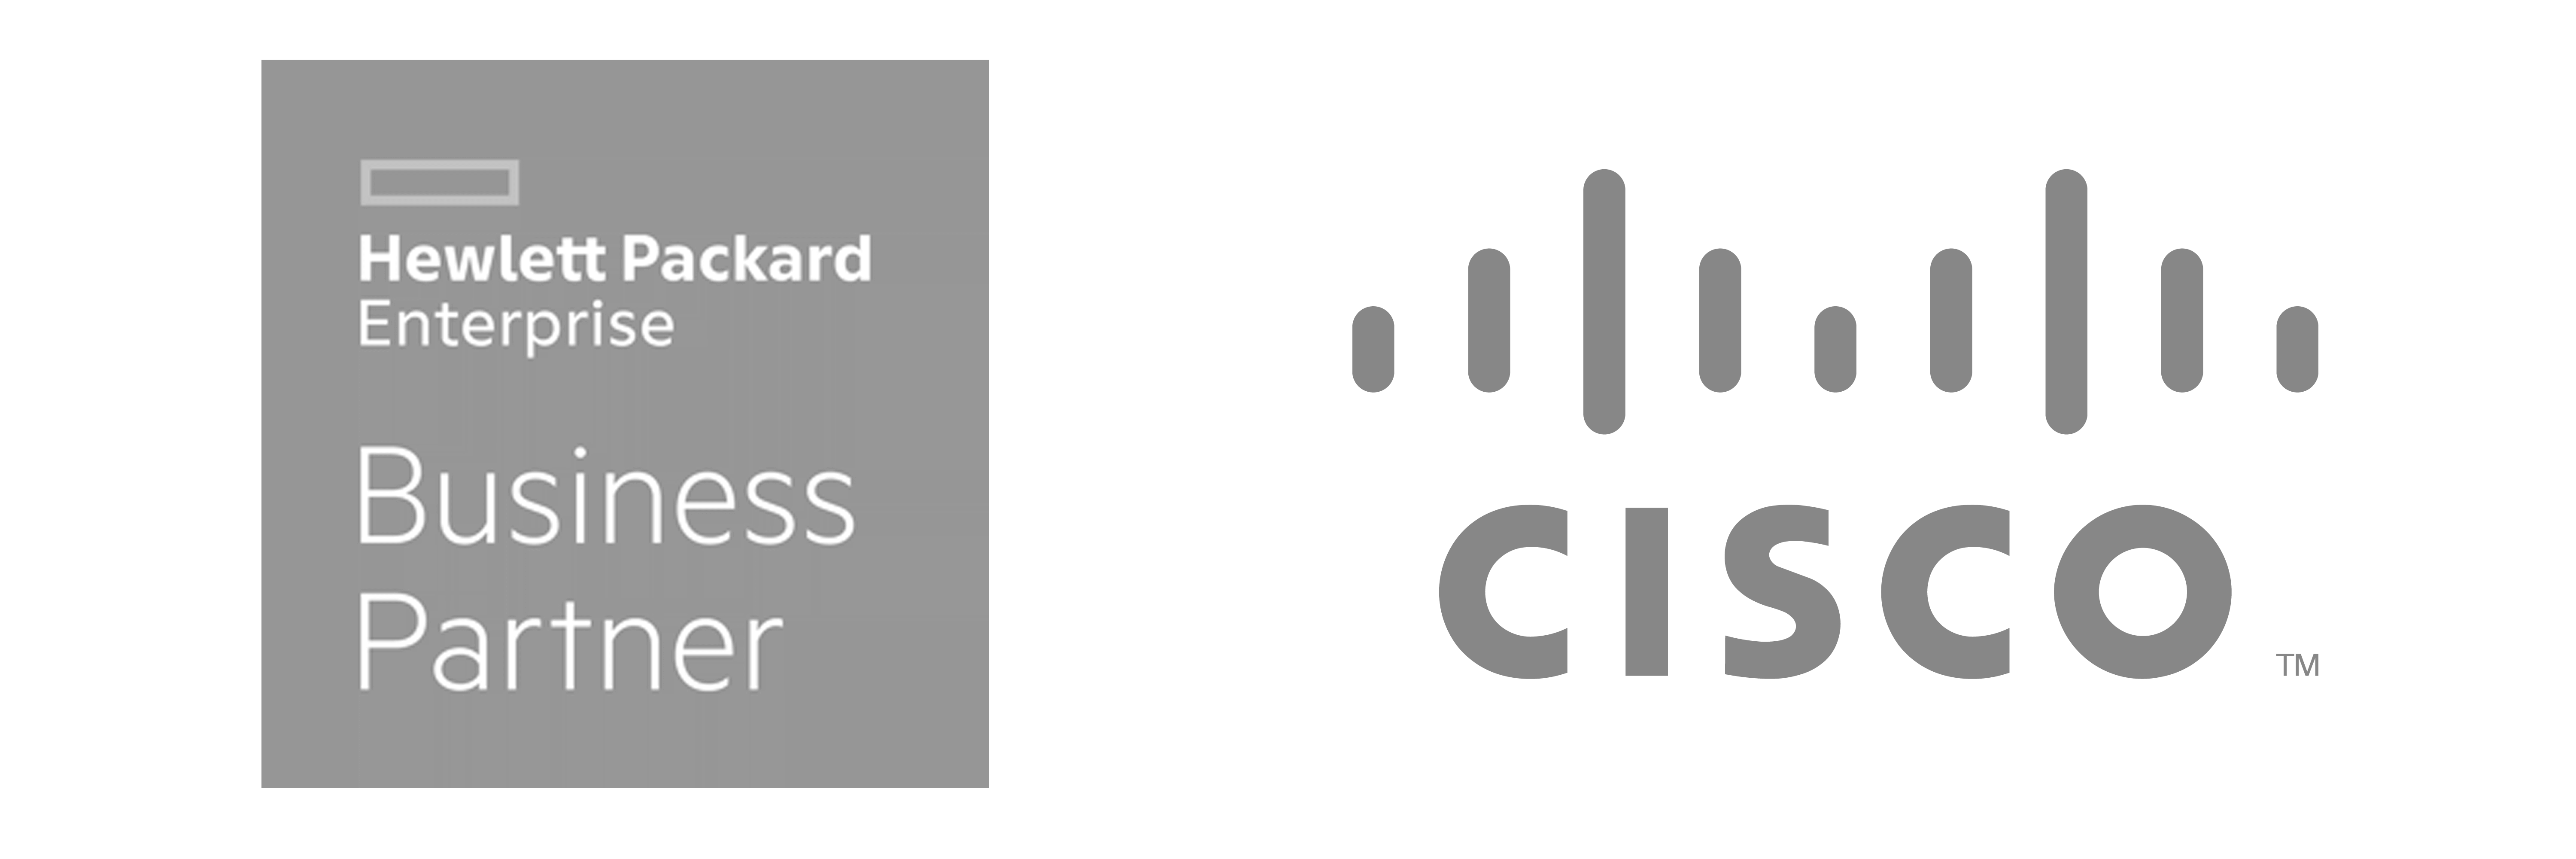 HP+Cisco